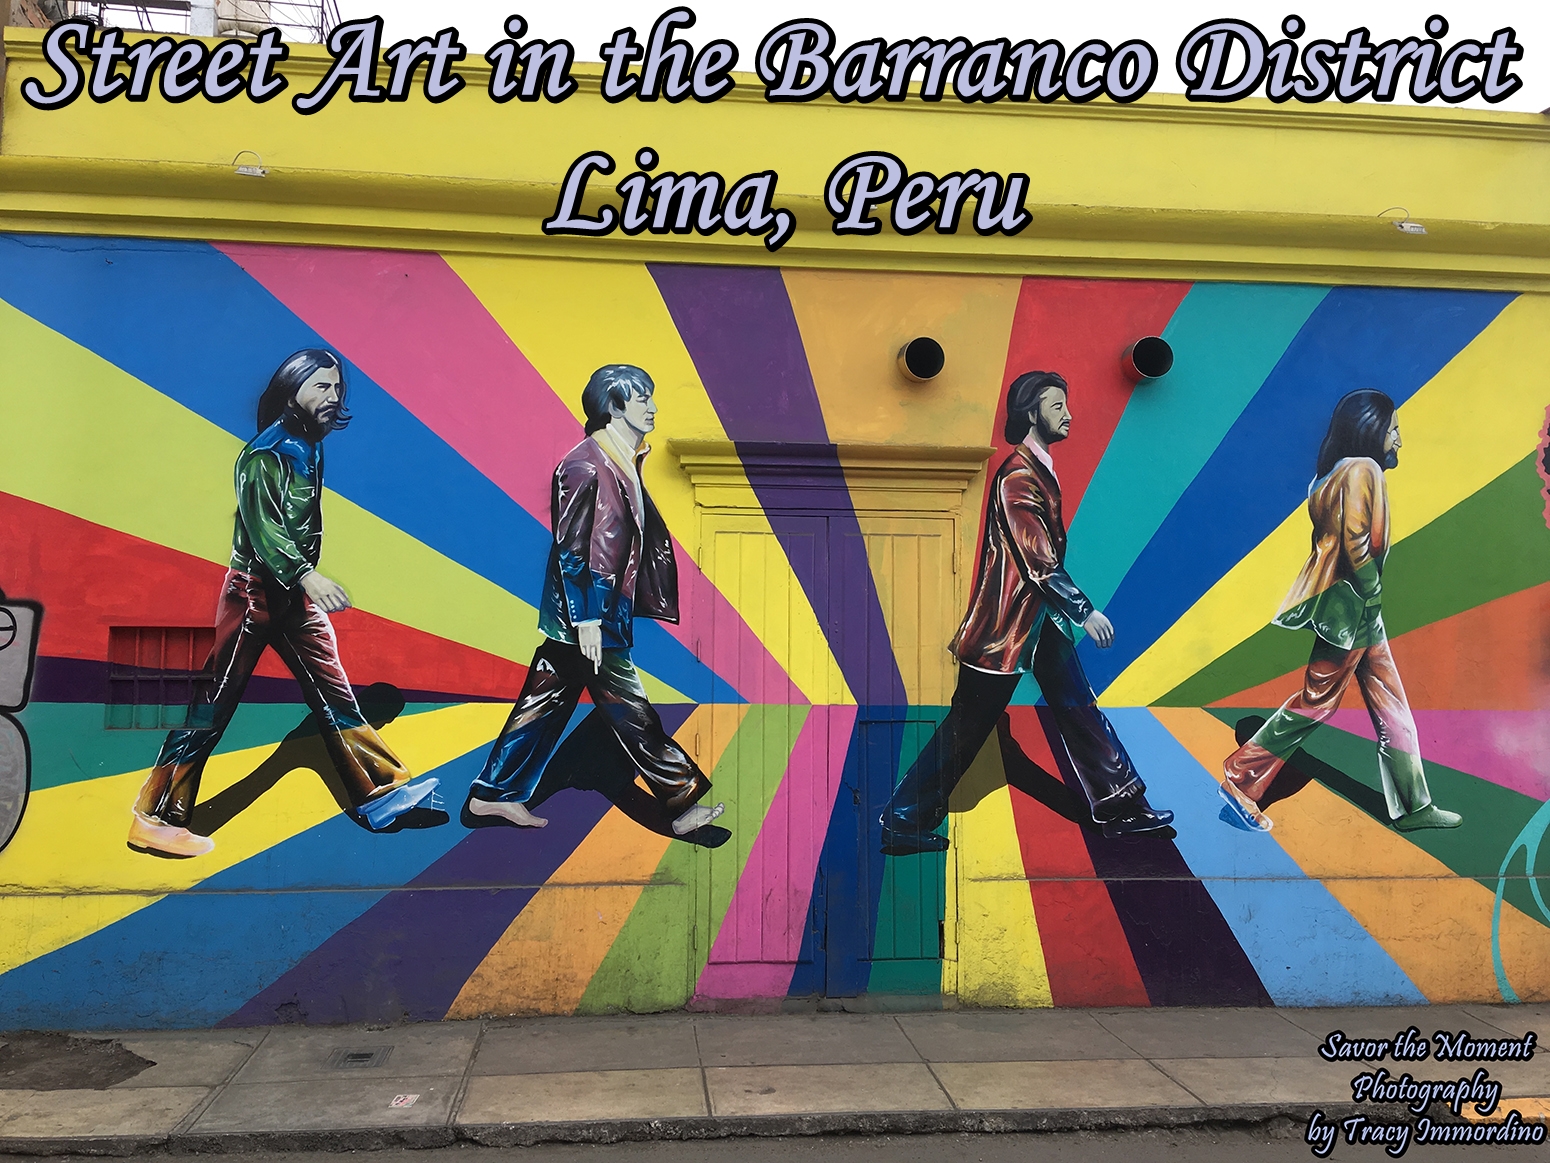 Street Art in the Barranco District in Lima, Peru